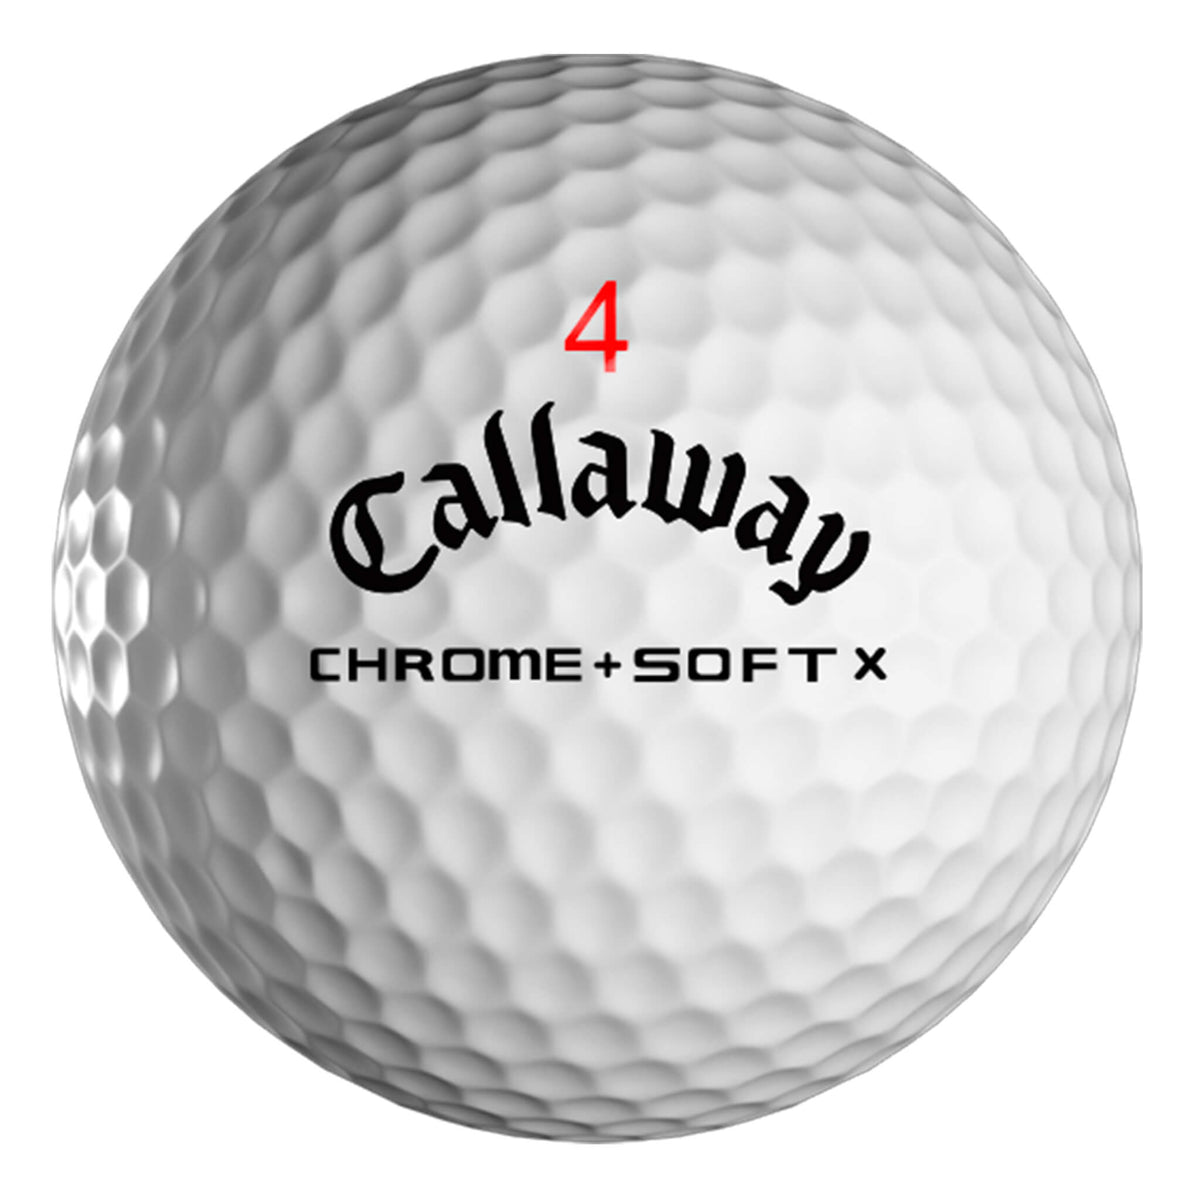 Callaway Chrome Soft triple track